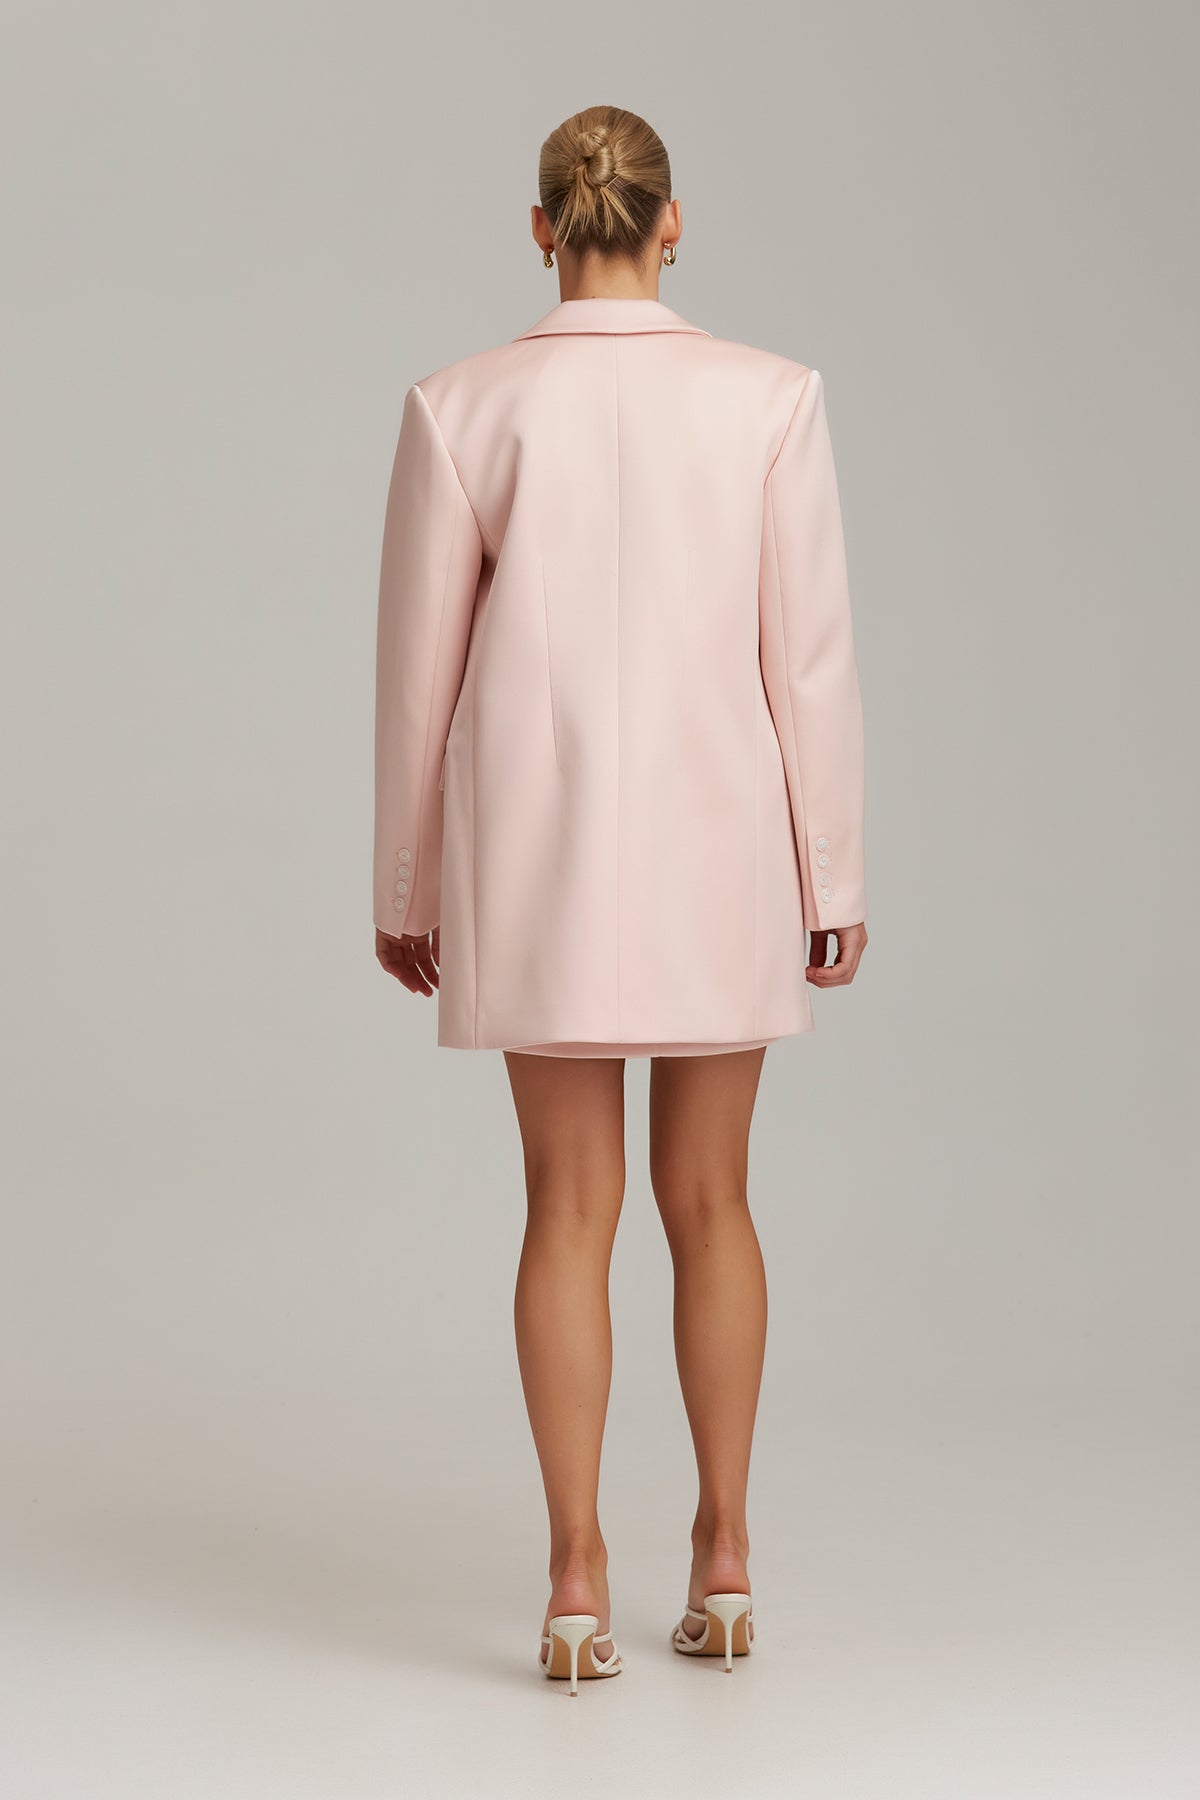 C/MEO Collective - Captivate Blazer Dress - Blush